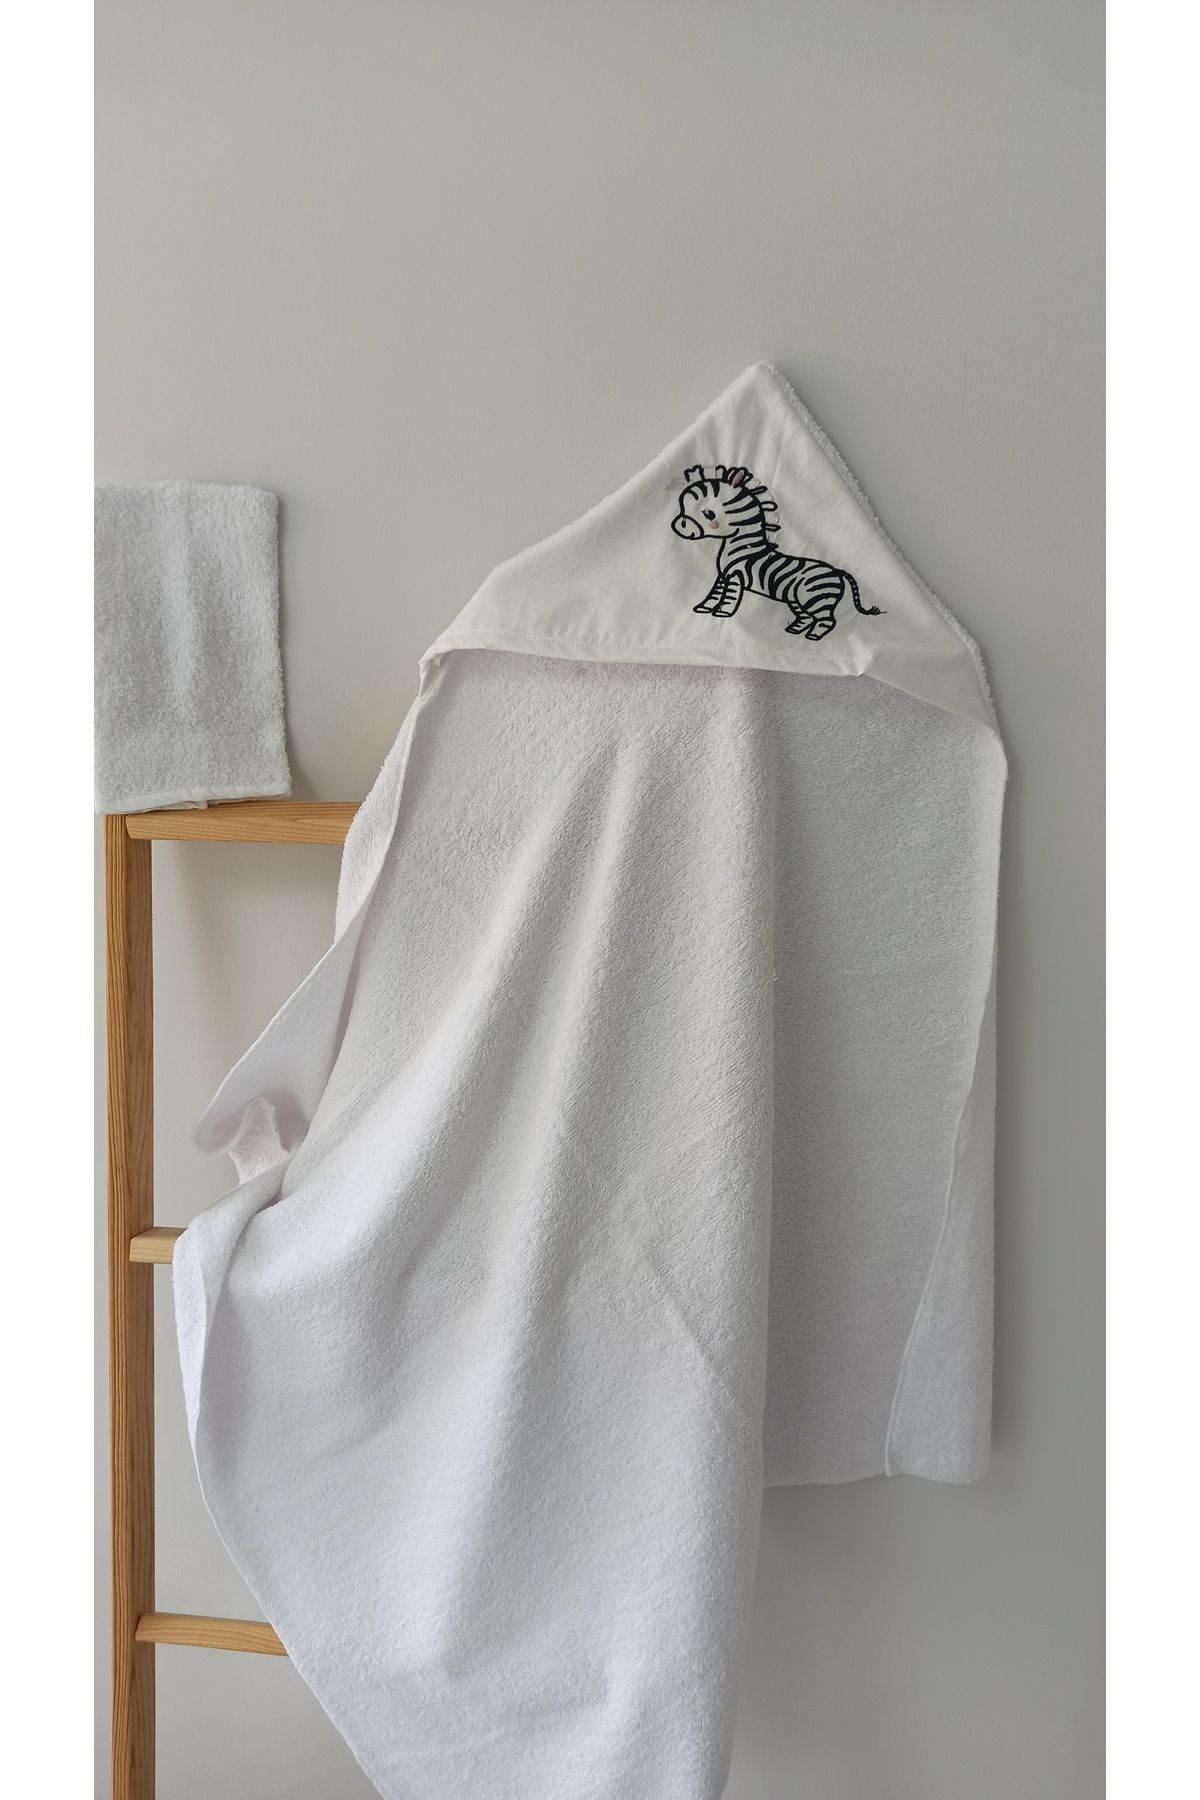 Ege HOME Decoration&Accessories Ege Home Bebek banyo havlu kese seti beyaz zebra nakışlı